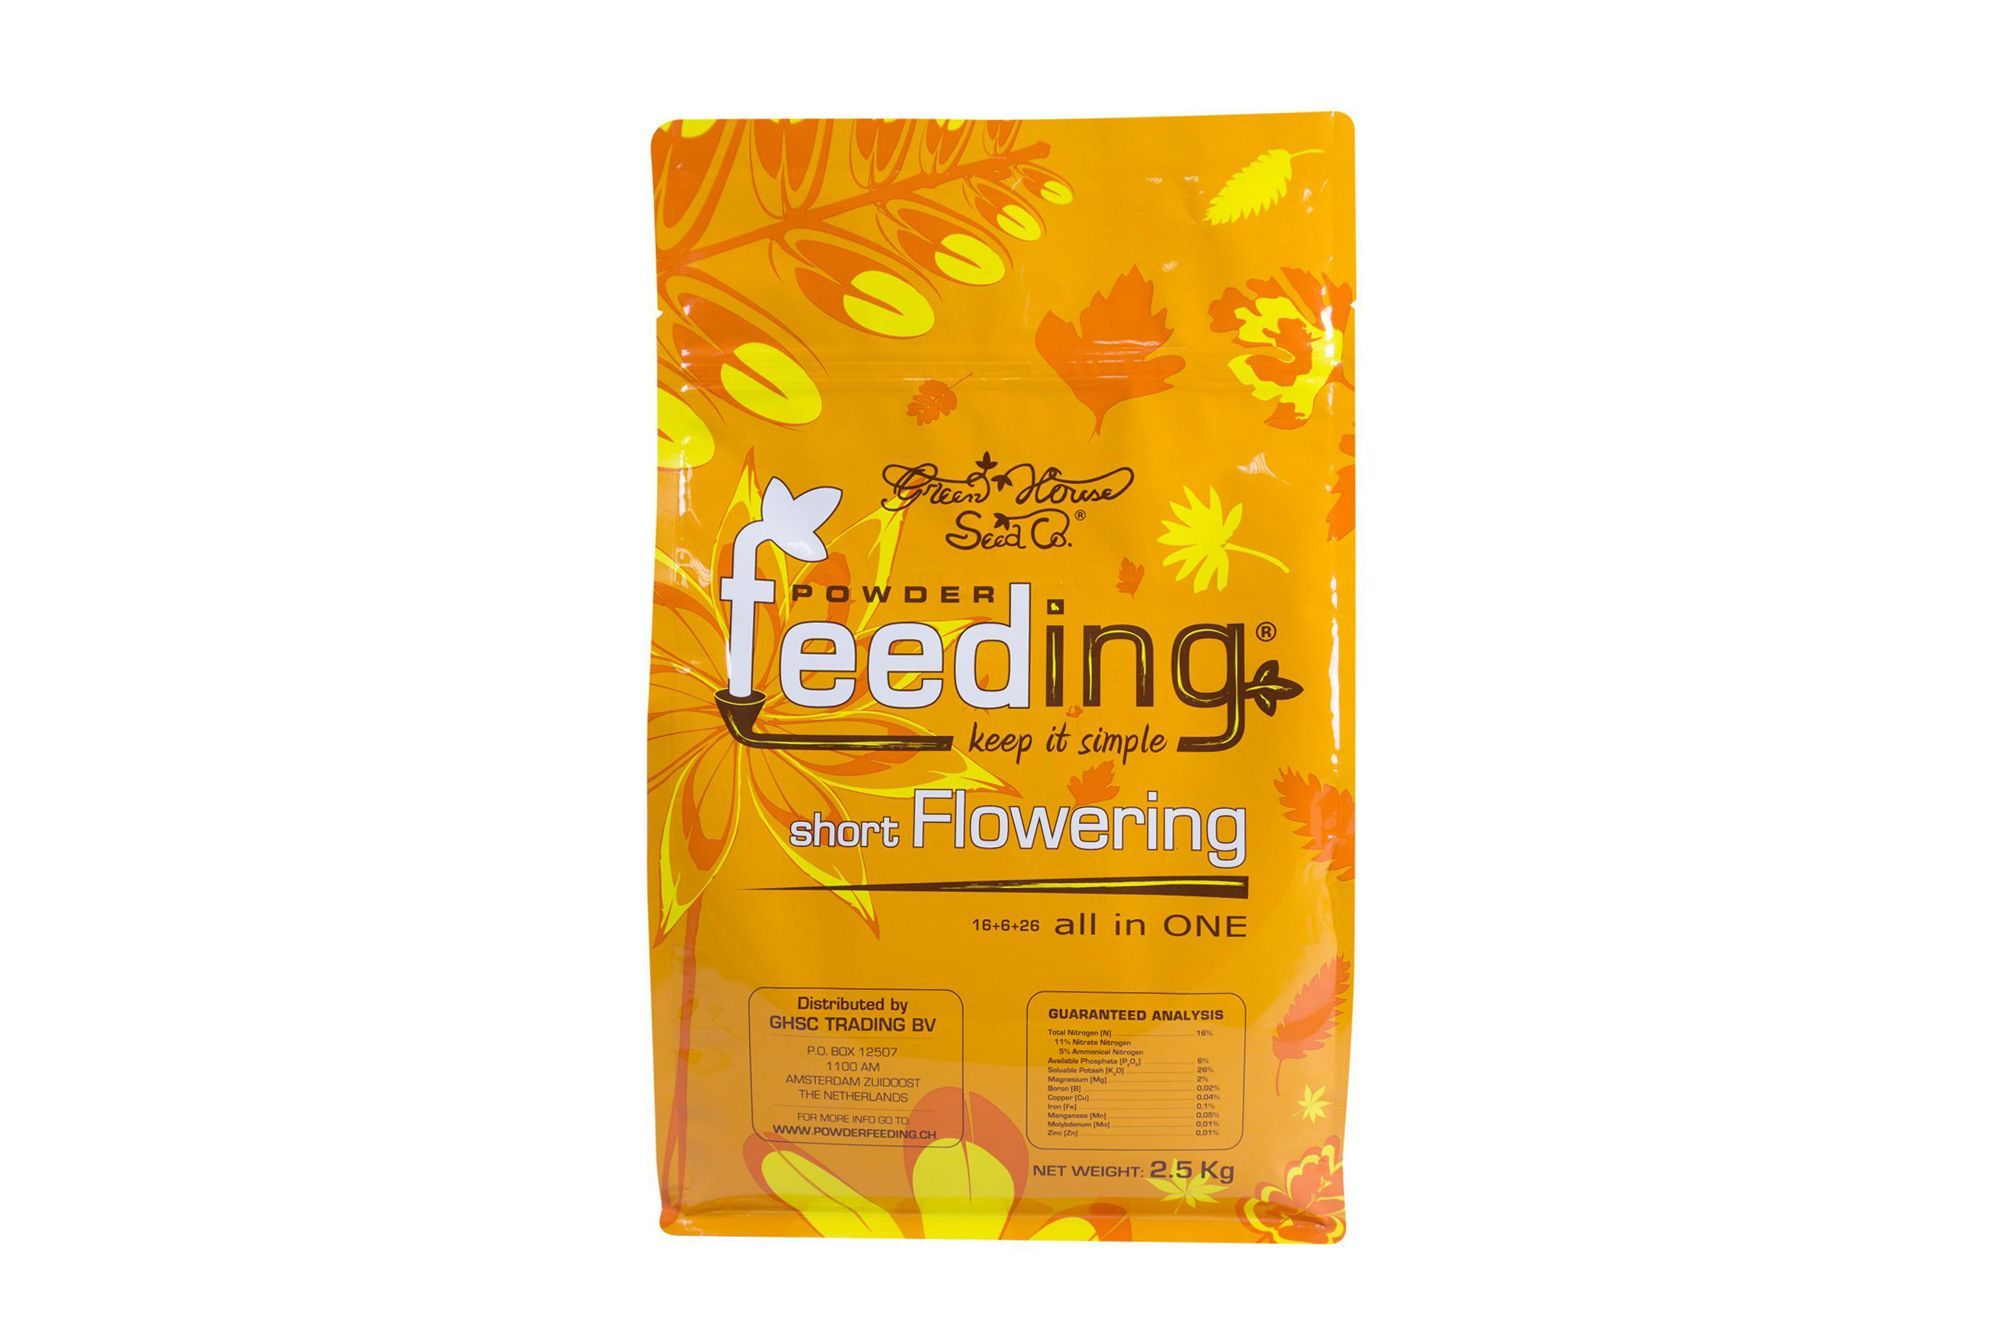 Powder feeding short flowering таблица. Грин Хаус фидинг шорт. Powder feeding таблица. Powder feeding grow 2.5 кг.